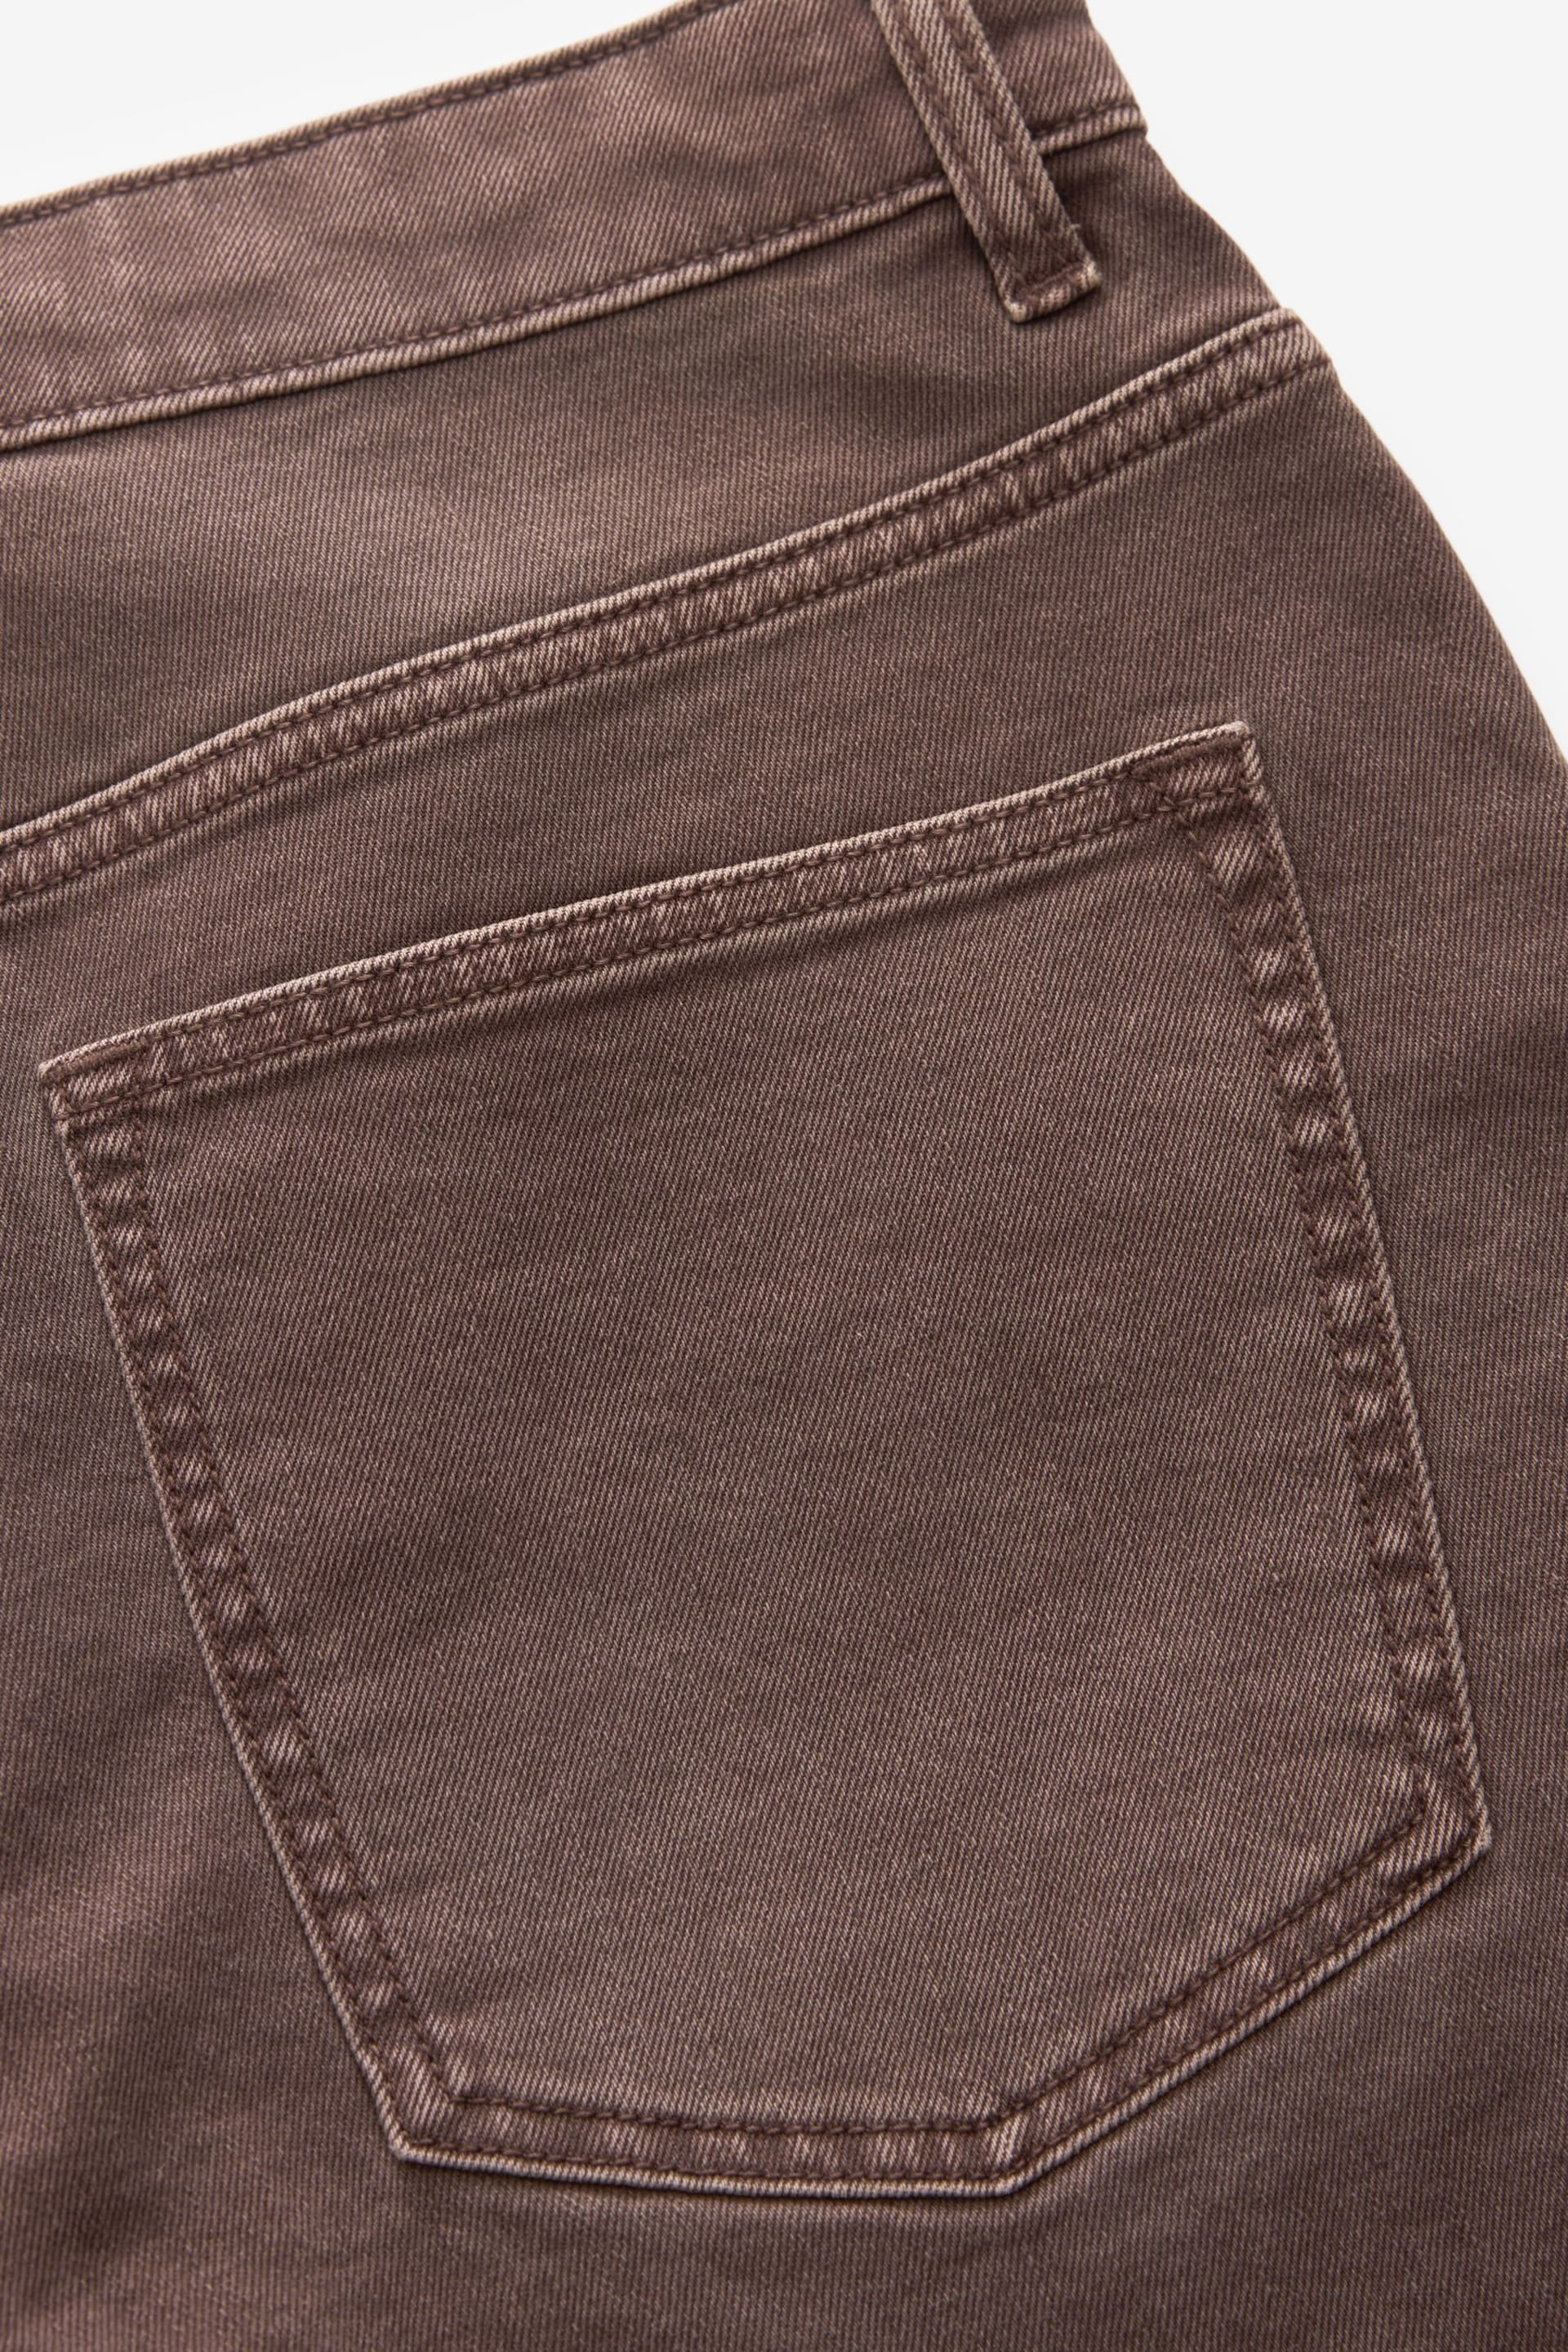 Rust Brown Garment Dye Denim Shorts - Image 9 of 9